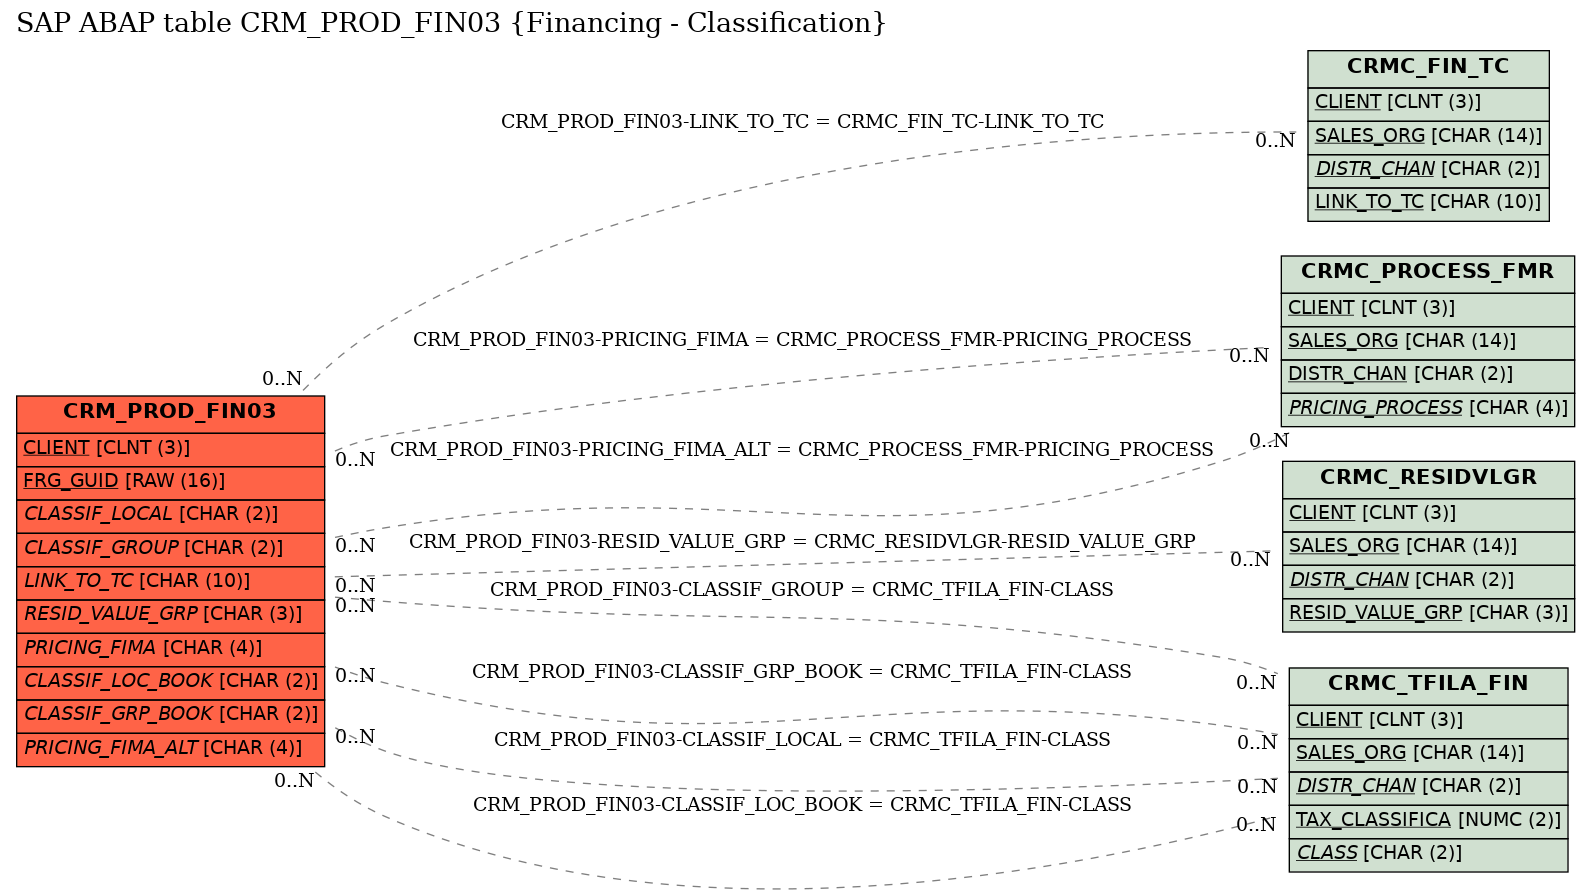 E-R Diagram for table CRM_PROD_FIN03 (Financing - Classification)